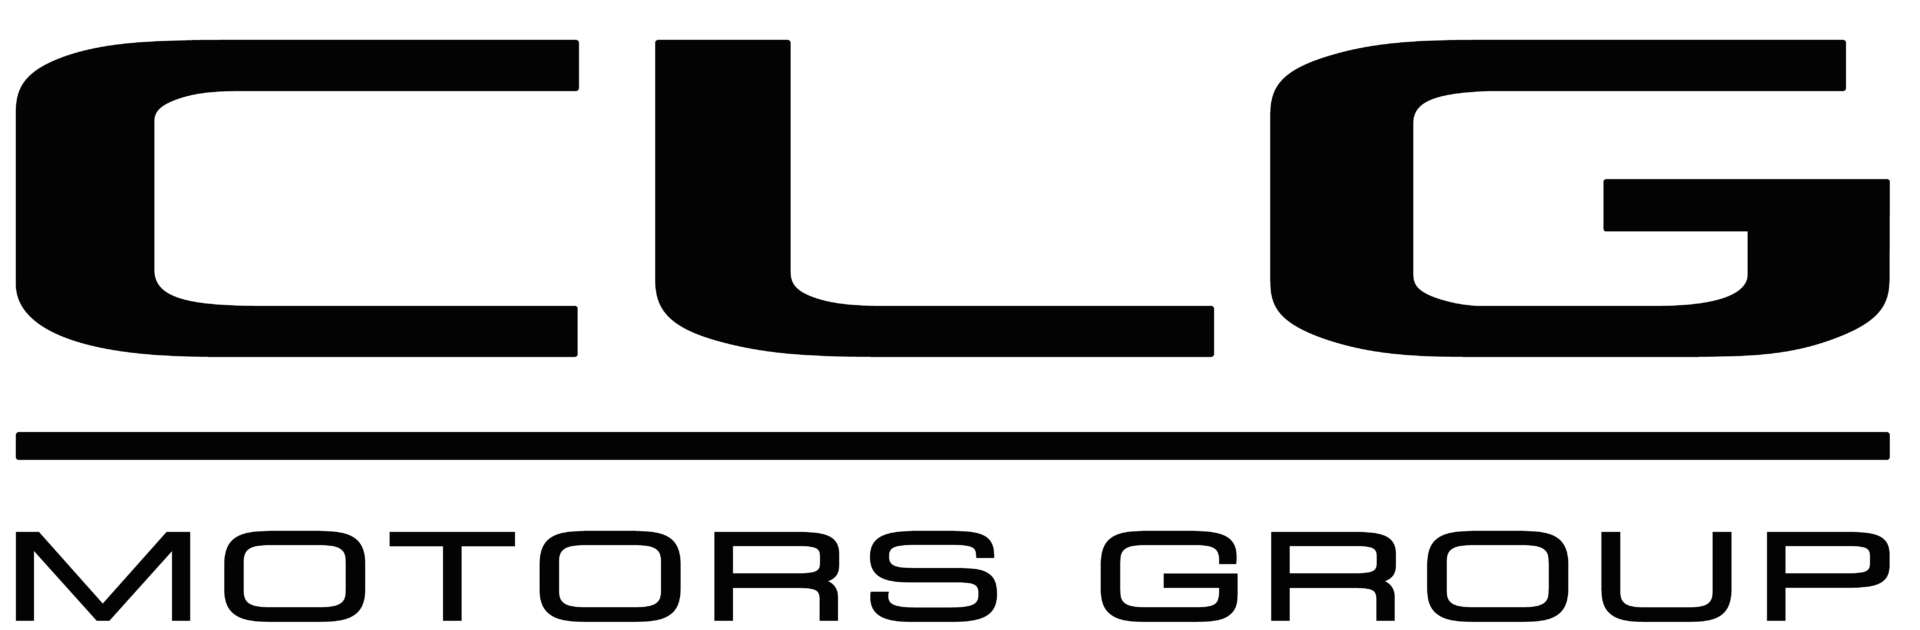 CLG Motors Group